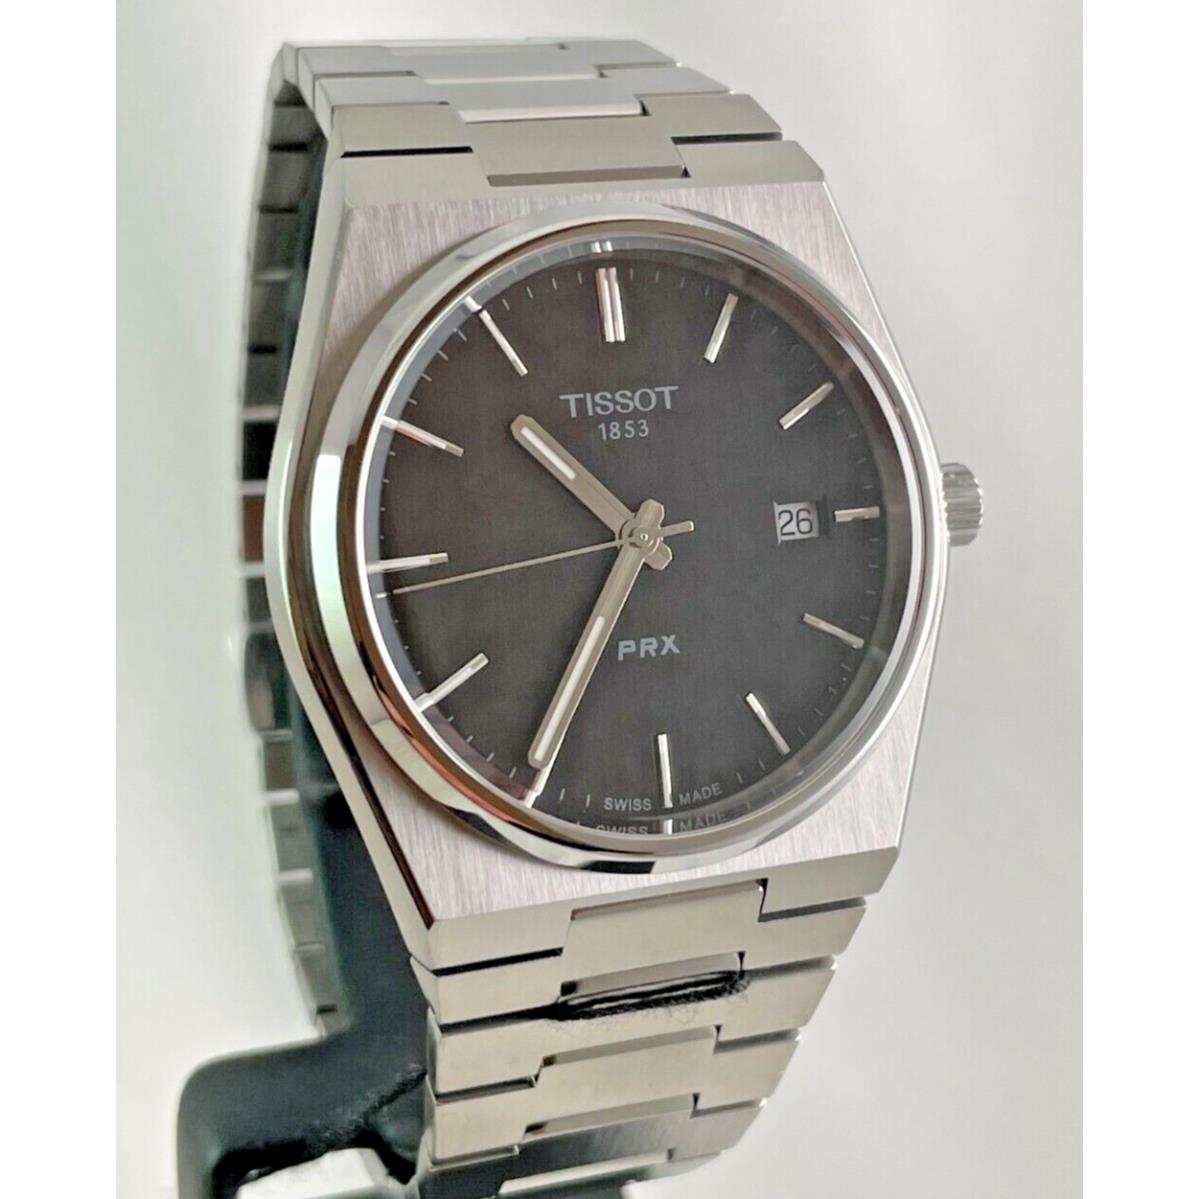 Tissot Prx T137.410.11.051.00 Quartz Wristwatch w/ Box + Papers